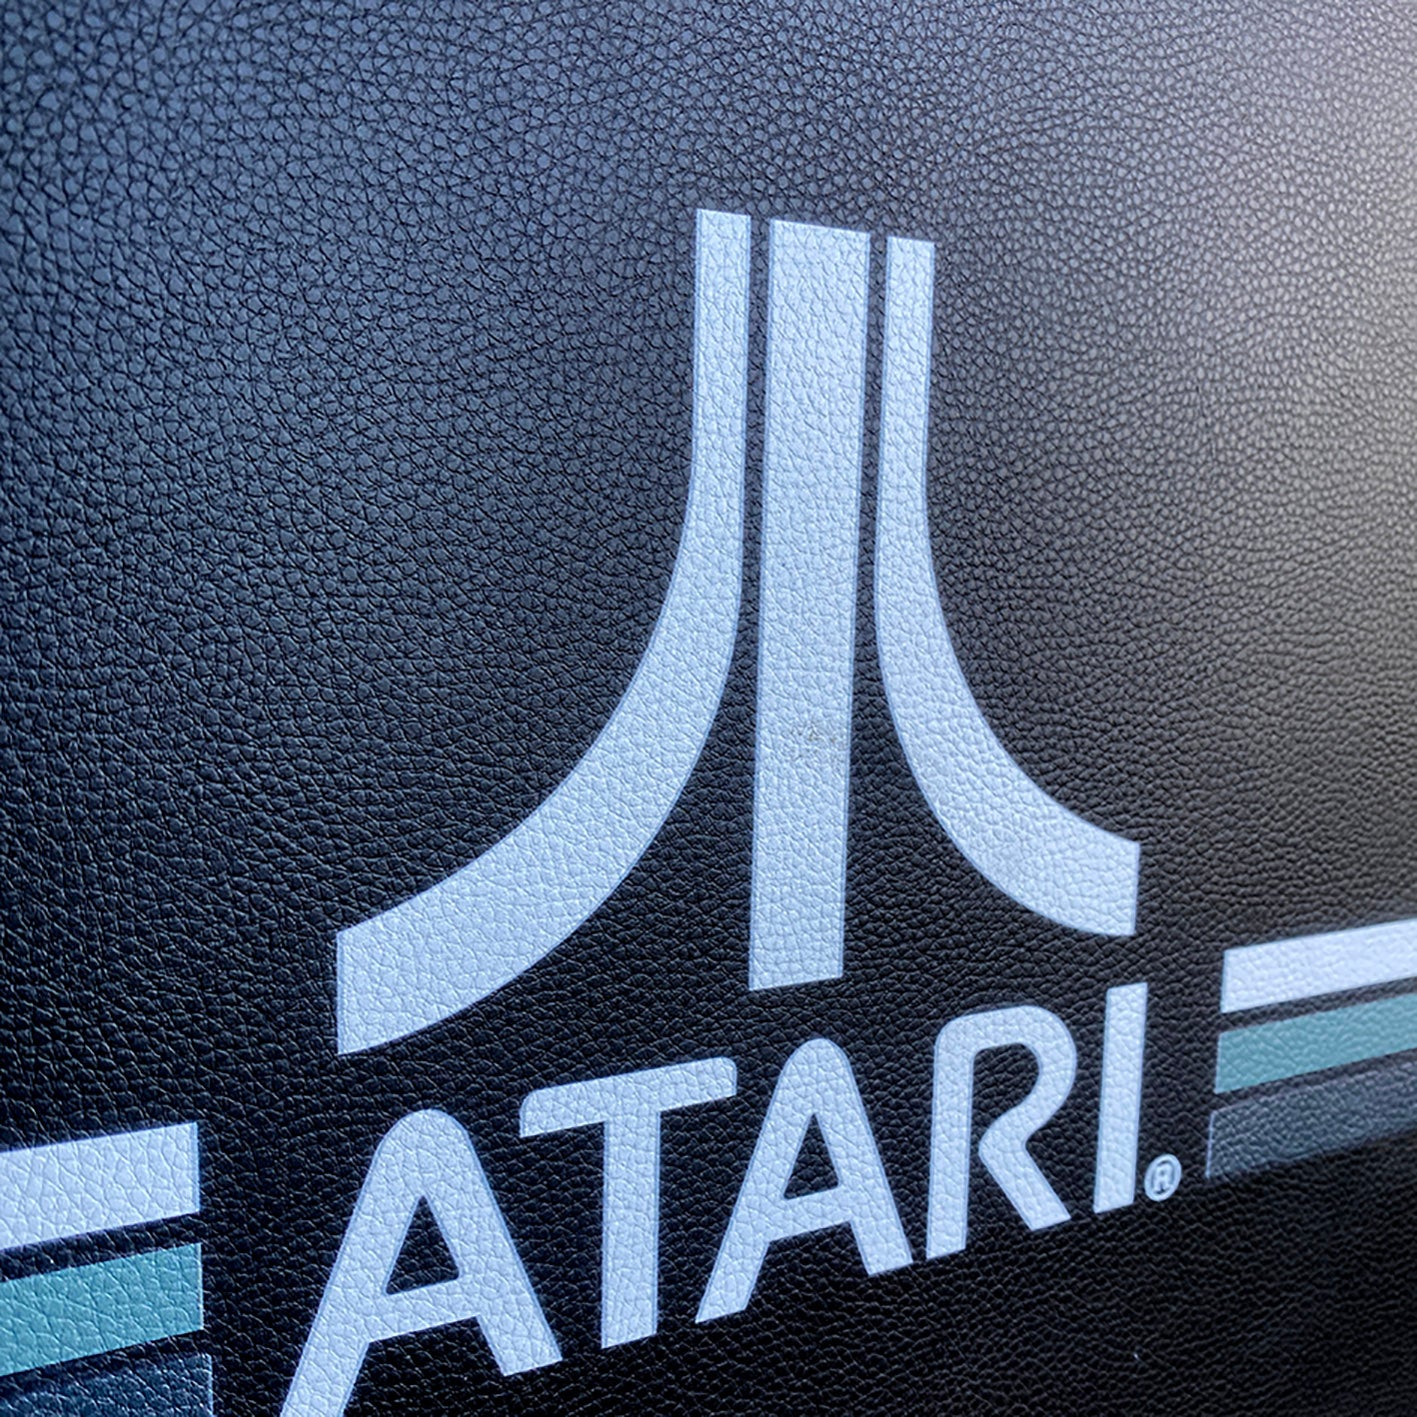 Atari Gaming Stool